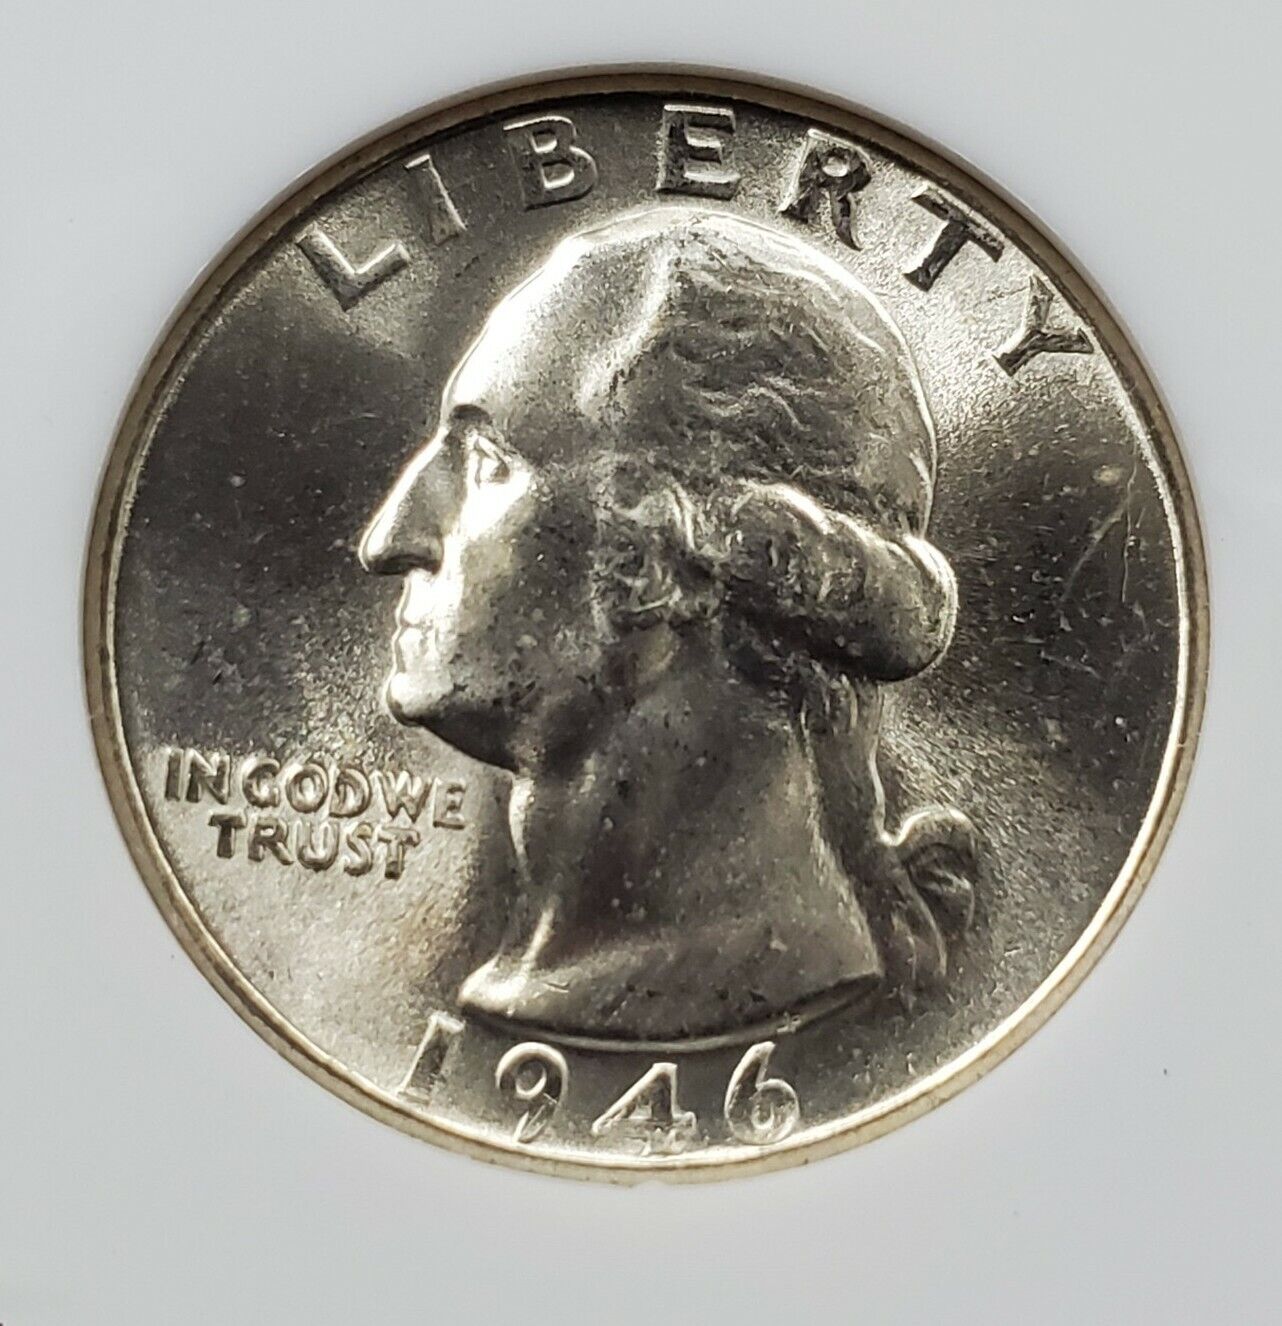 1946 S 25C Washington Quarter Silver Coin NGC MS66 Holder GEM BU Some toning